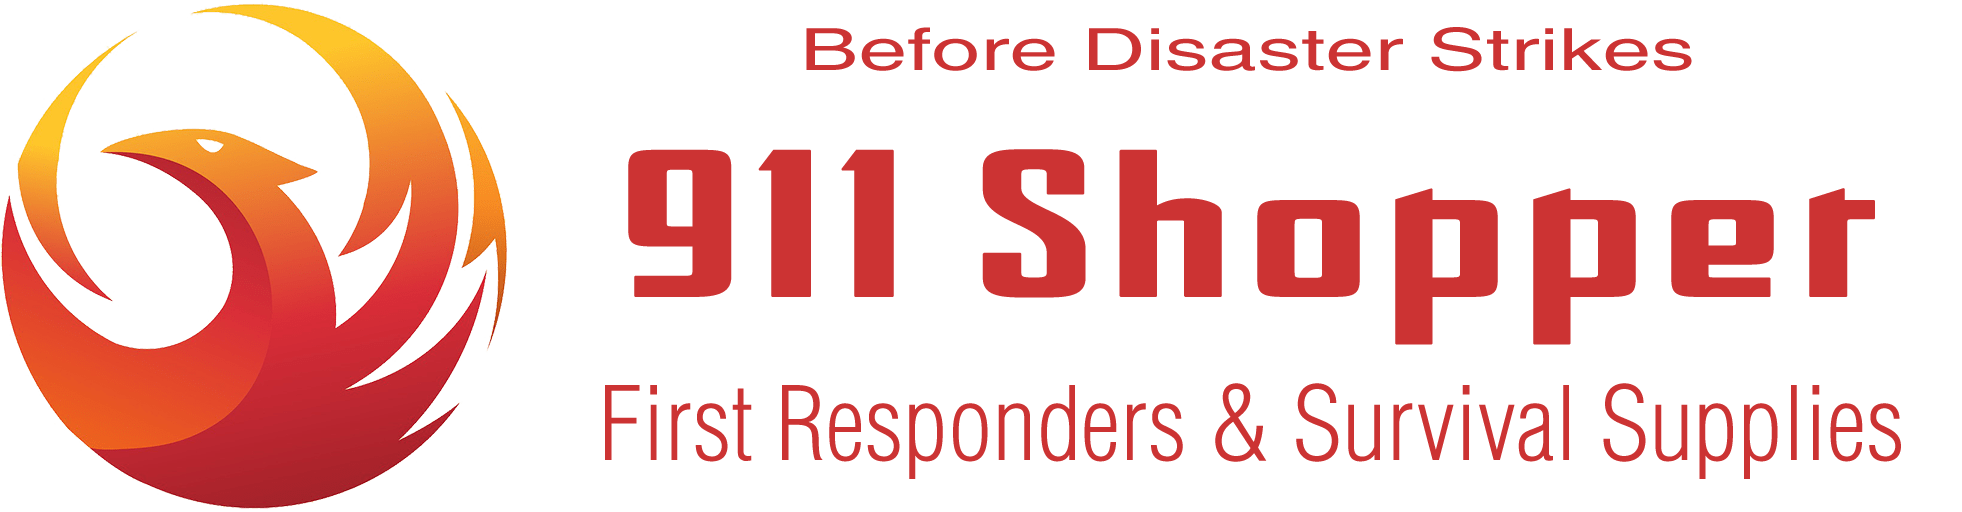 First Responder Supplies & Survival Kits at 911Shopper.com